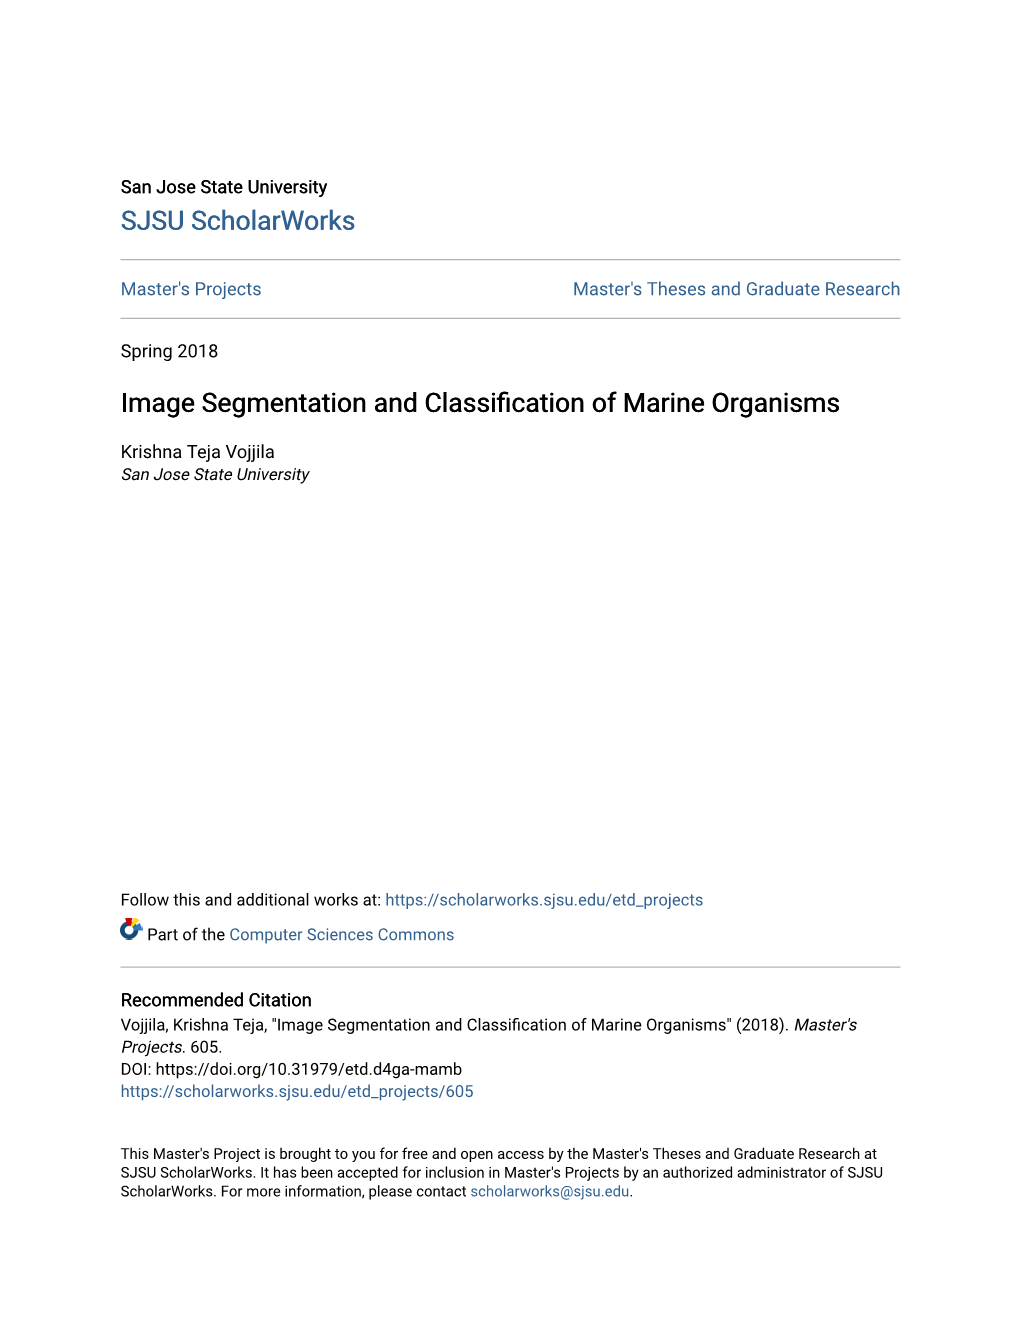 Image Segmentation and Classification of Marine Organisms